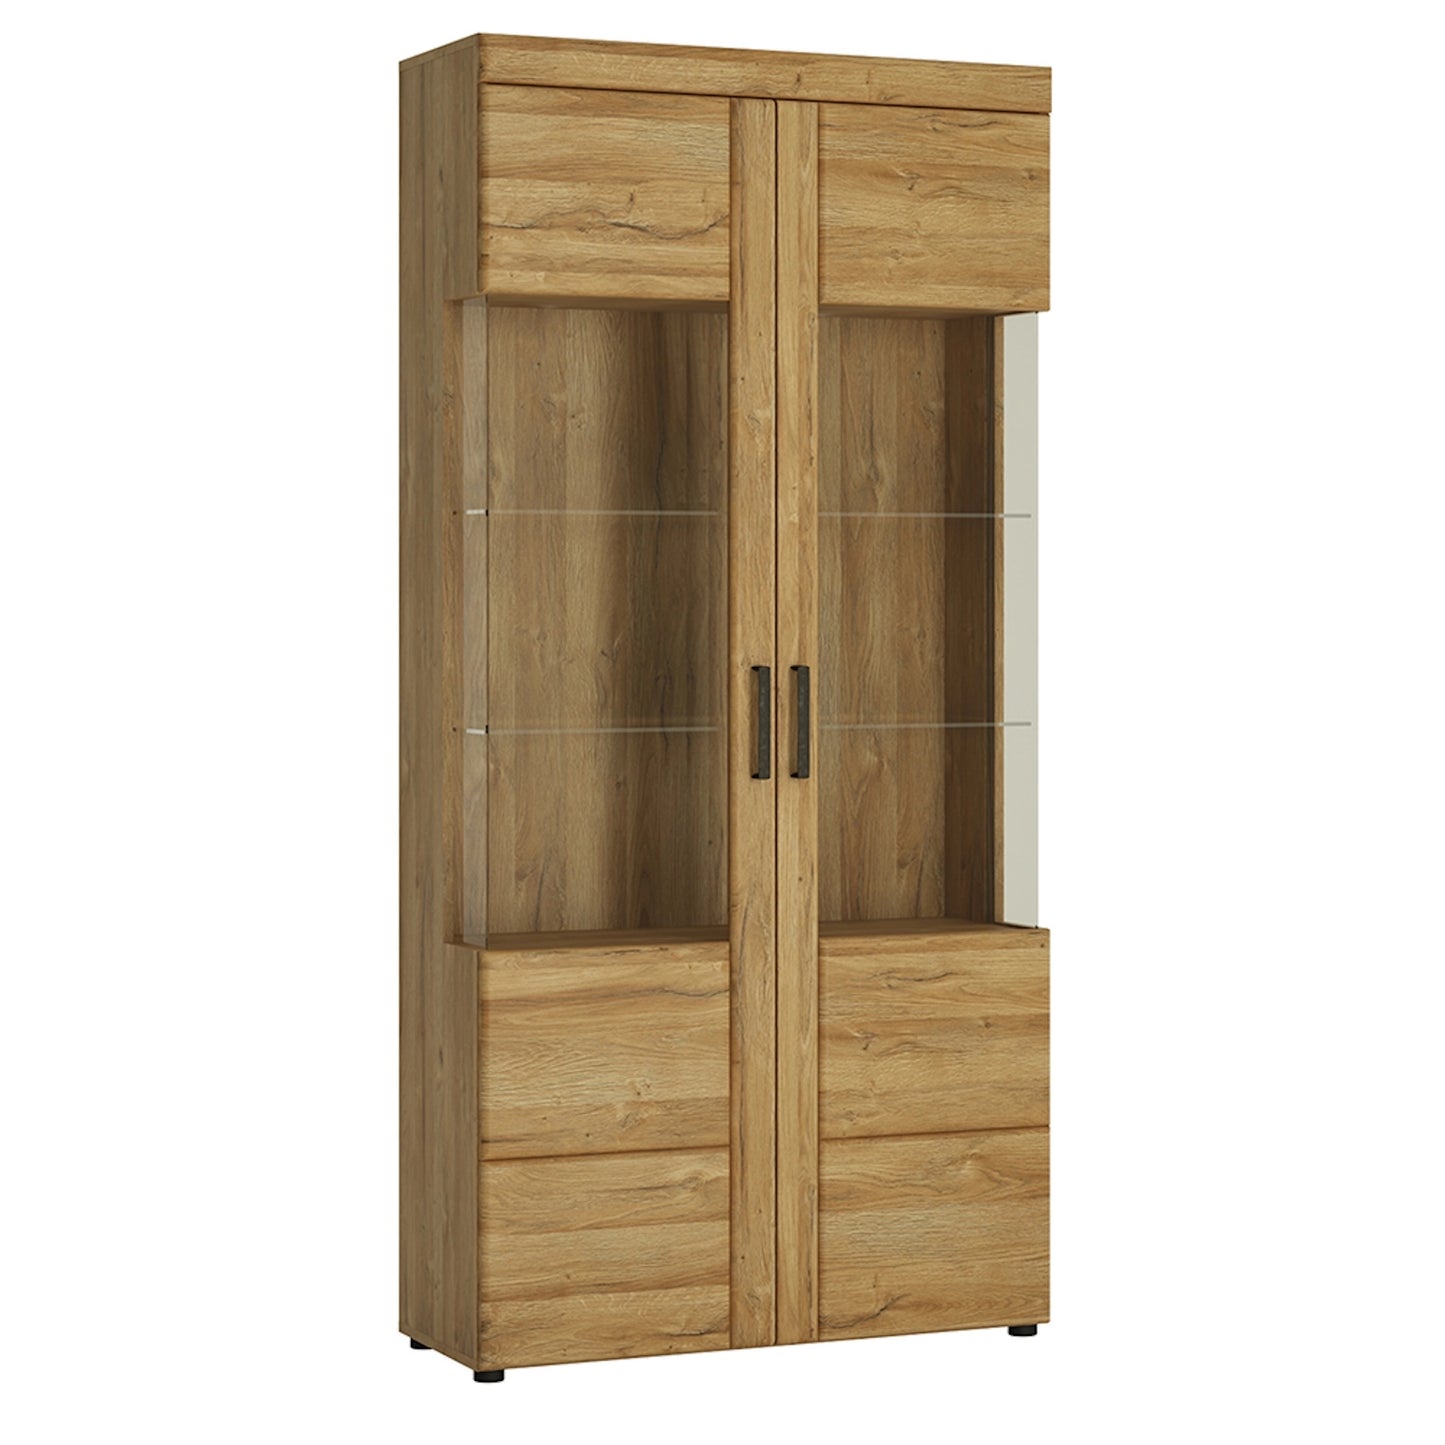 Furniture To Go Cortina Tall Wide 2 Door Glazed Display Cabinet in Grandson Oak